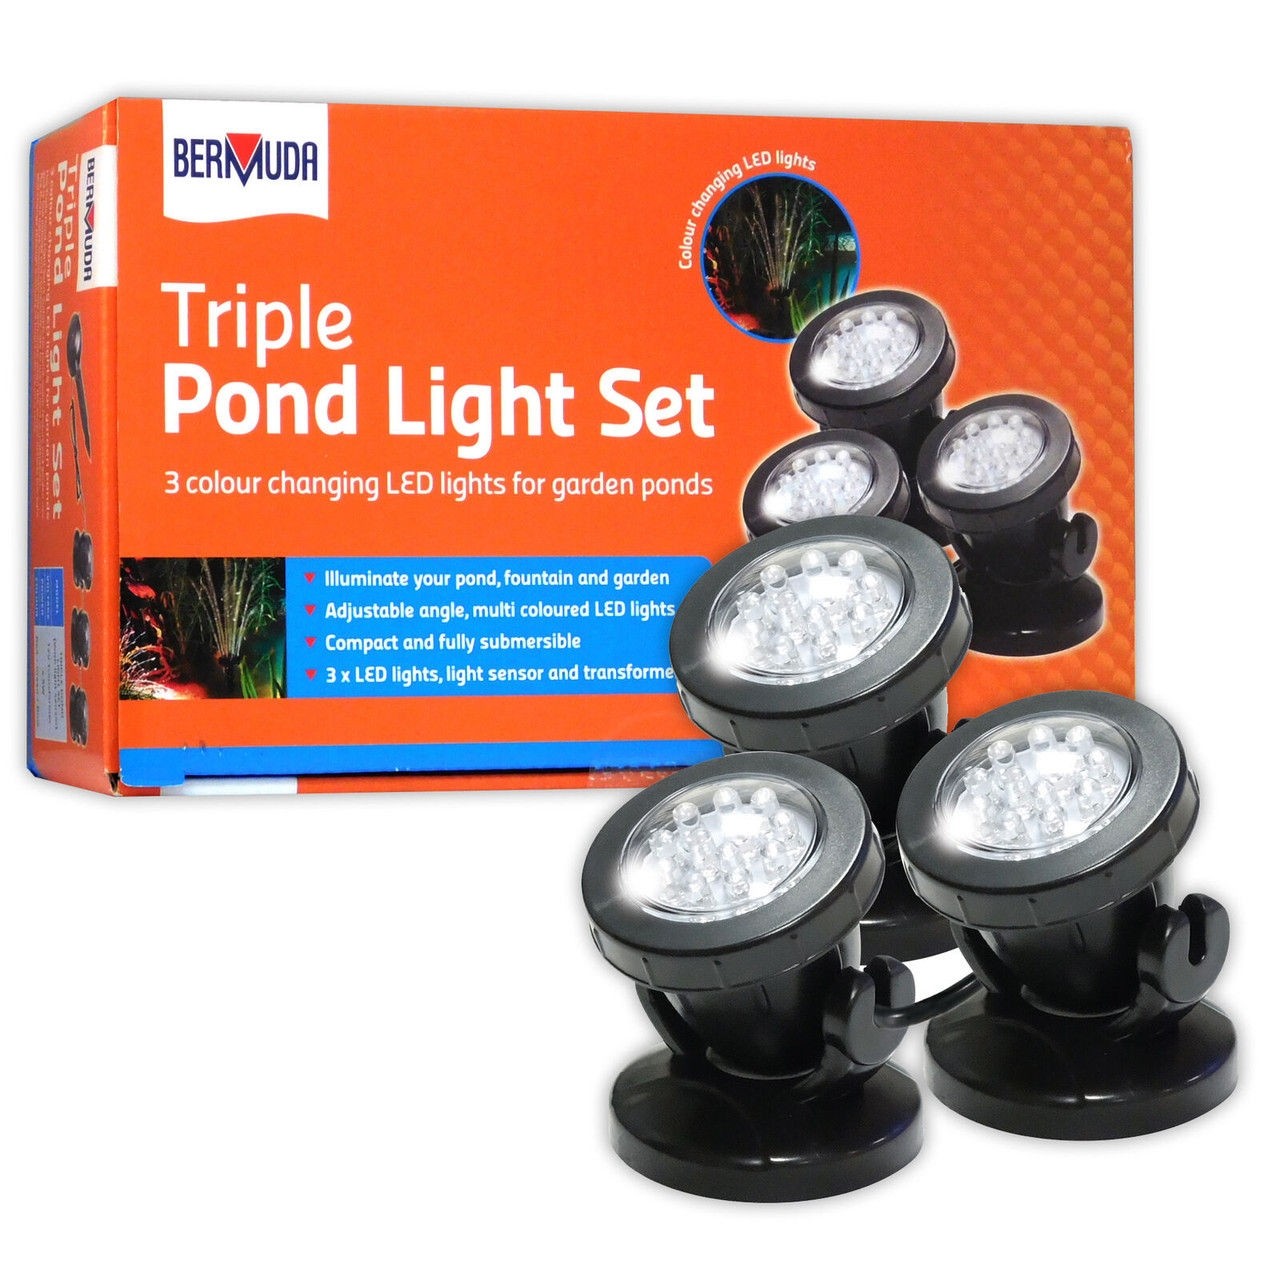 Bermuda Triple Pond Light Set